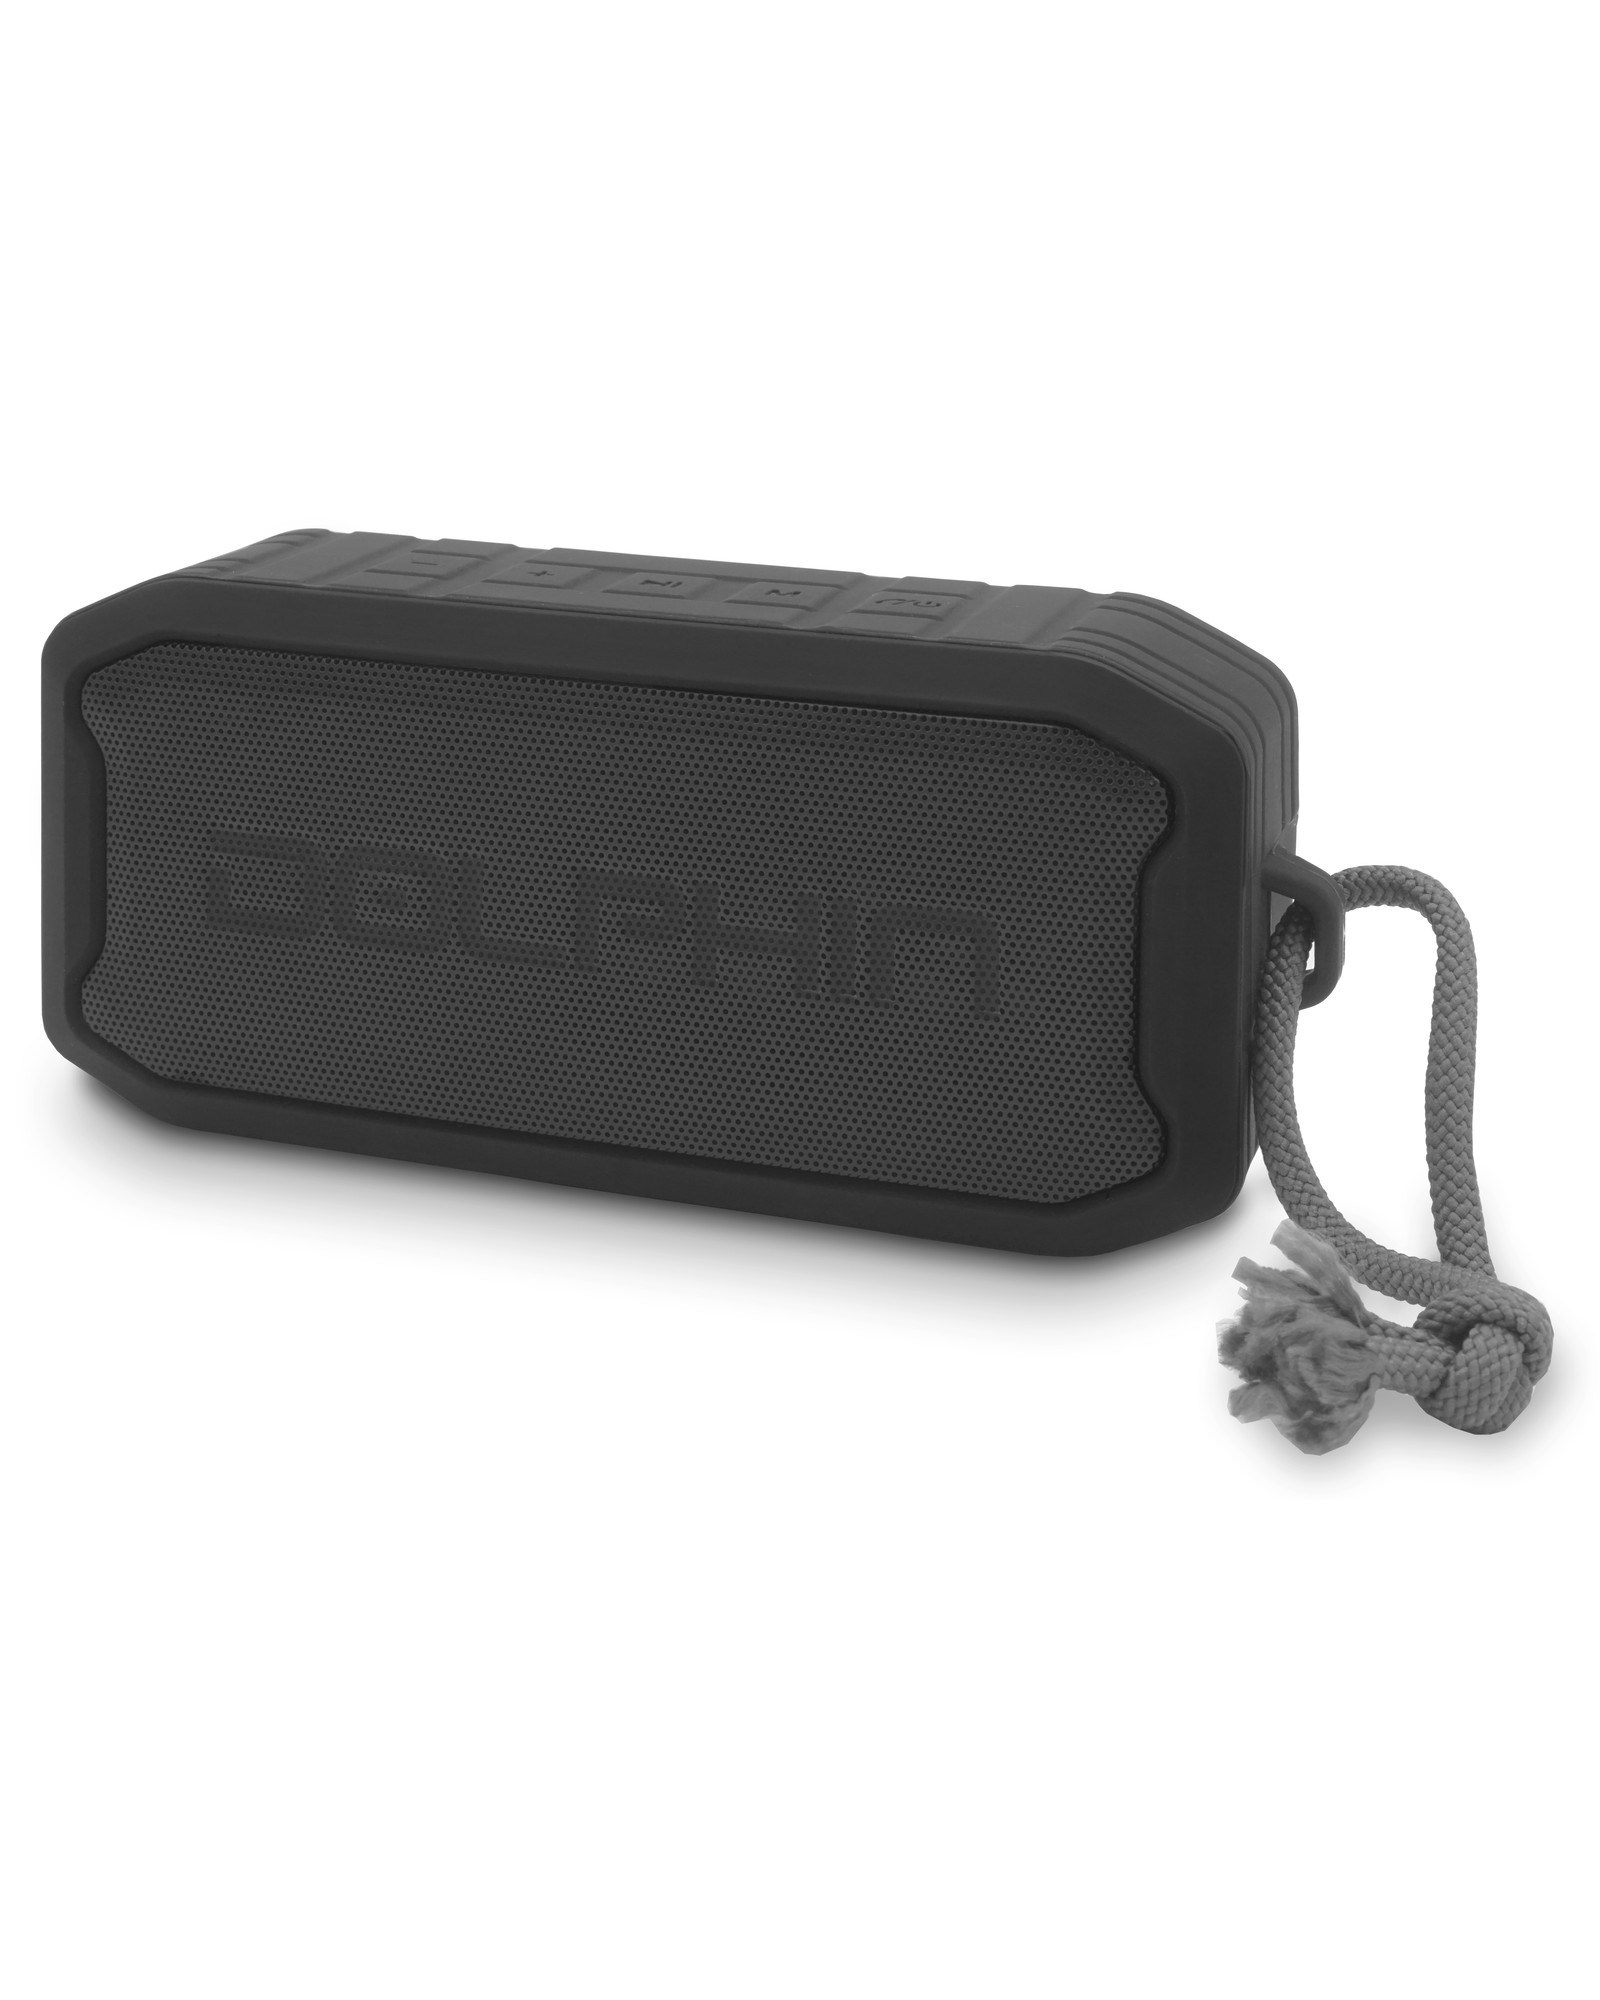 Dolphin Audio DR-20 Waterproof Bluetooth Speaker